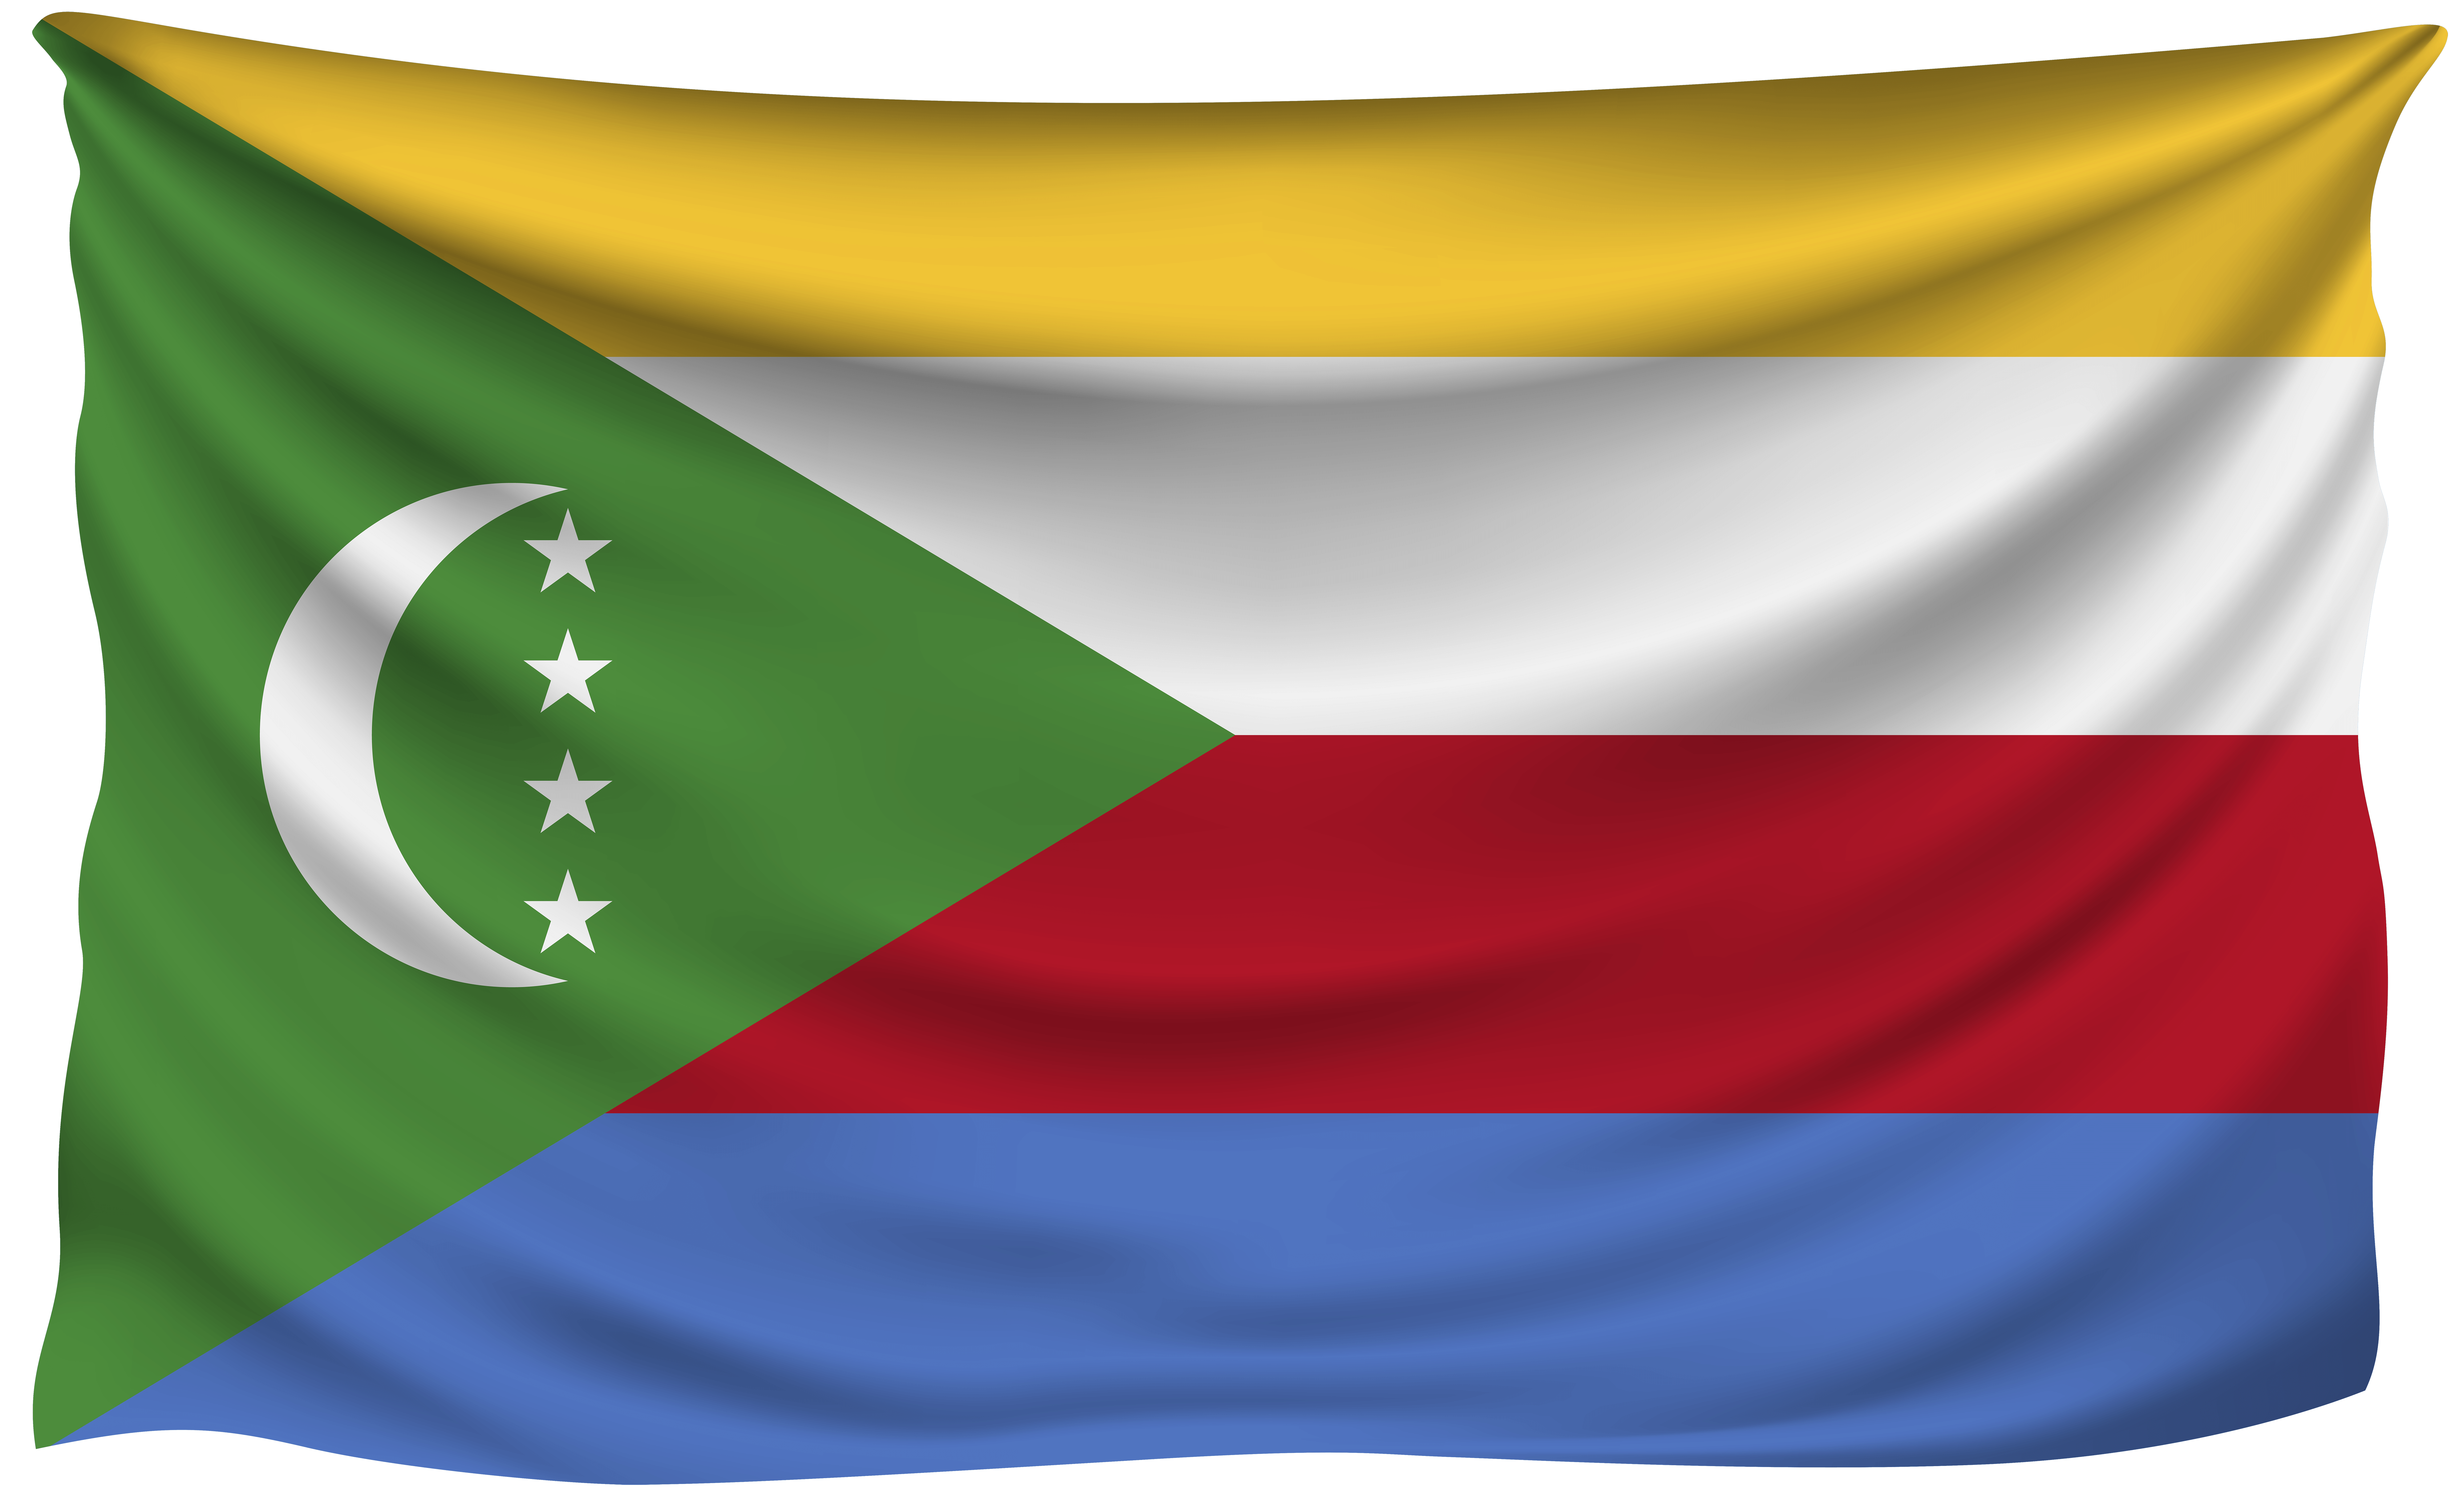 Comoros Wrinkled Flag Quality Image